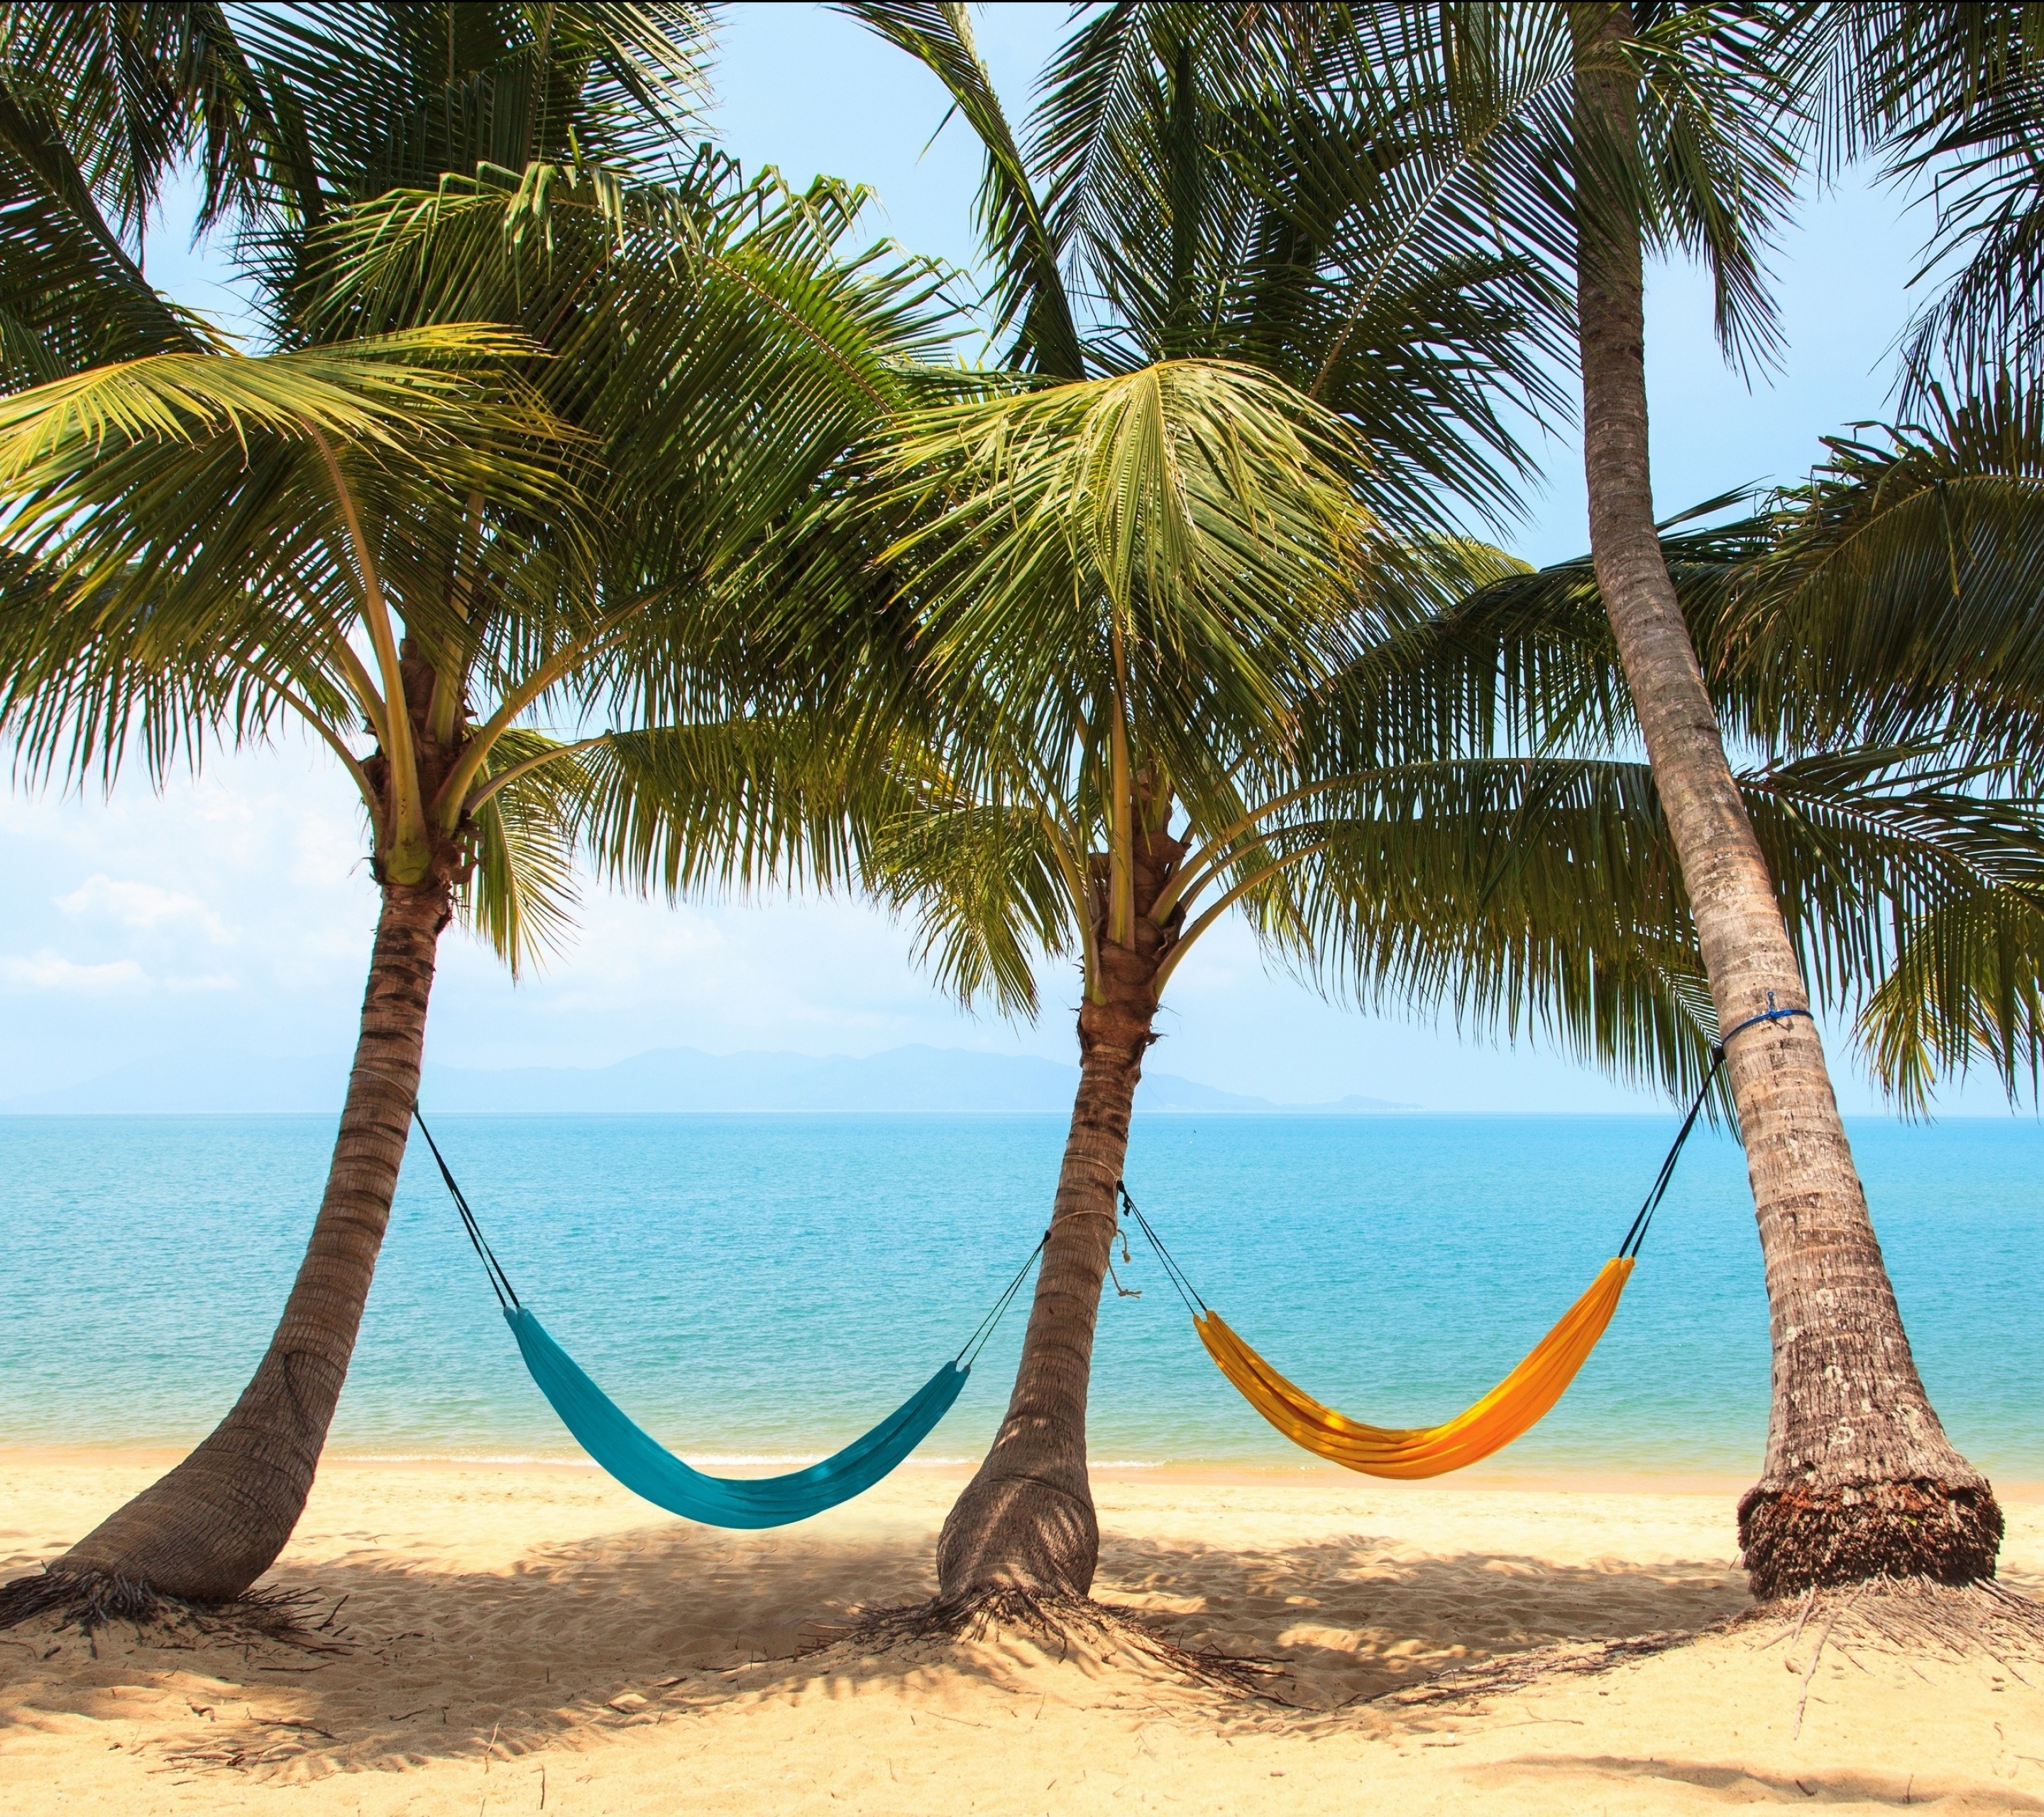 Descarga gratuita de fondo de pantalla para móvil de Mar, Playa, Día Festivo, Zona Tropical, Fotografía, Hamaca, Fiesta, Descansando, Palmera.